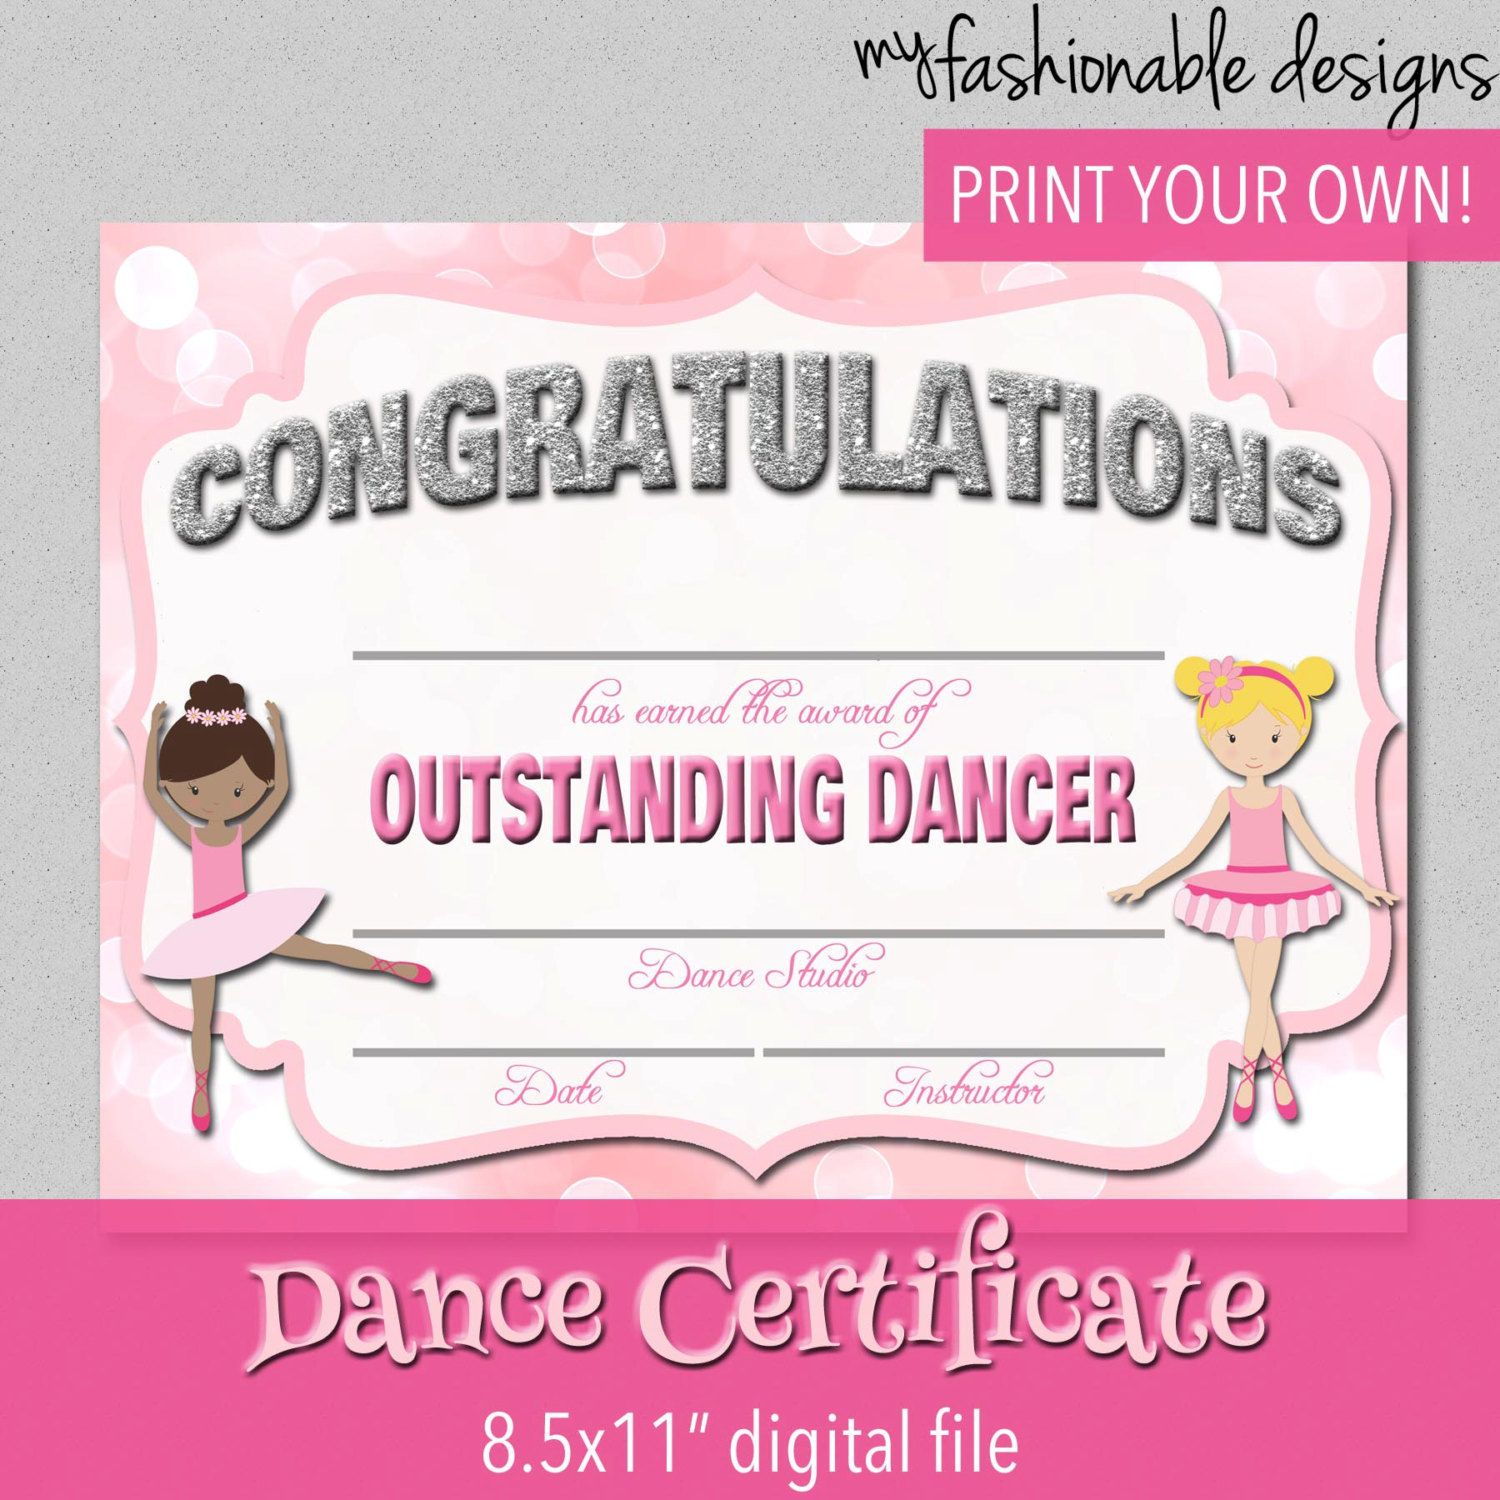 Certificate Templates: Free Dance Certificate Template With Regard To Dance Certificate Template